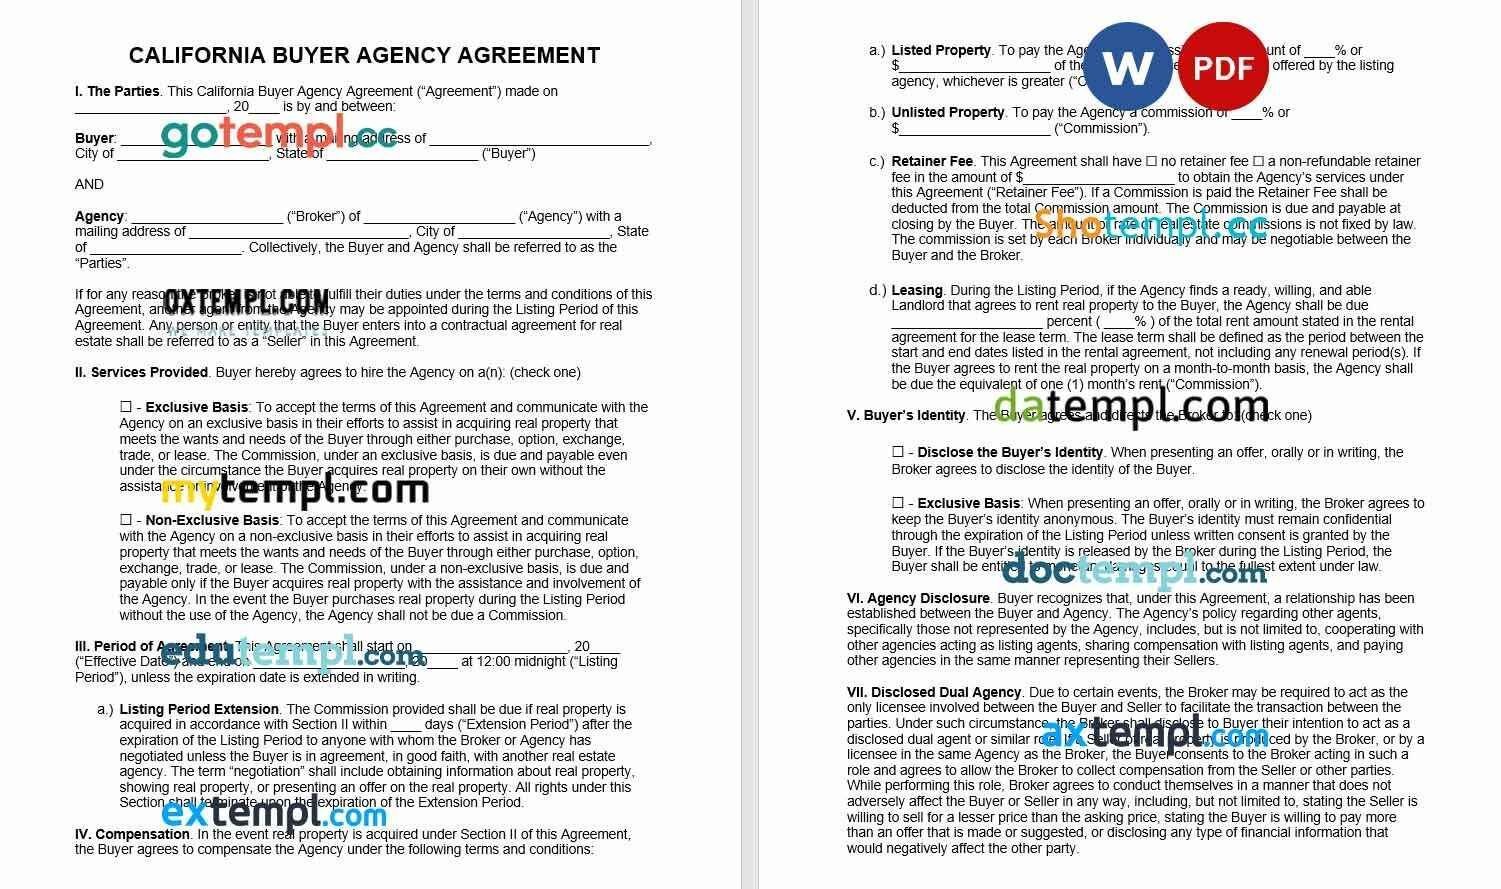 Minnesota Sublease Agreement Word example, fully editable